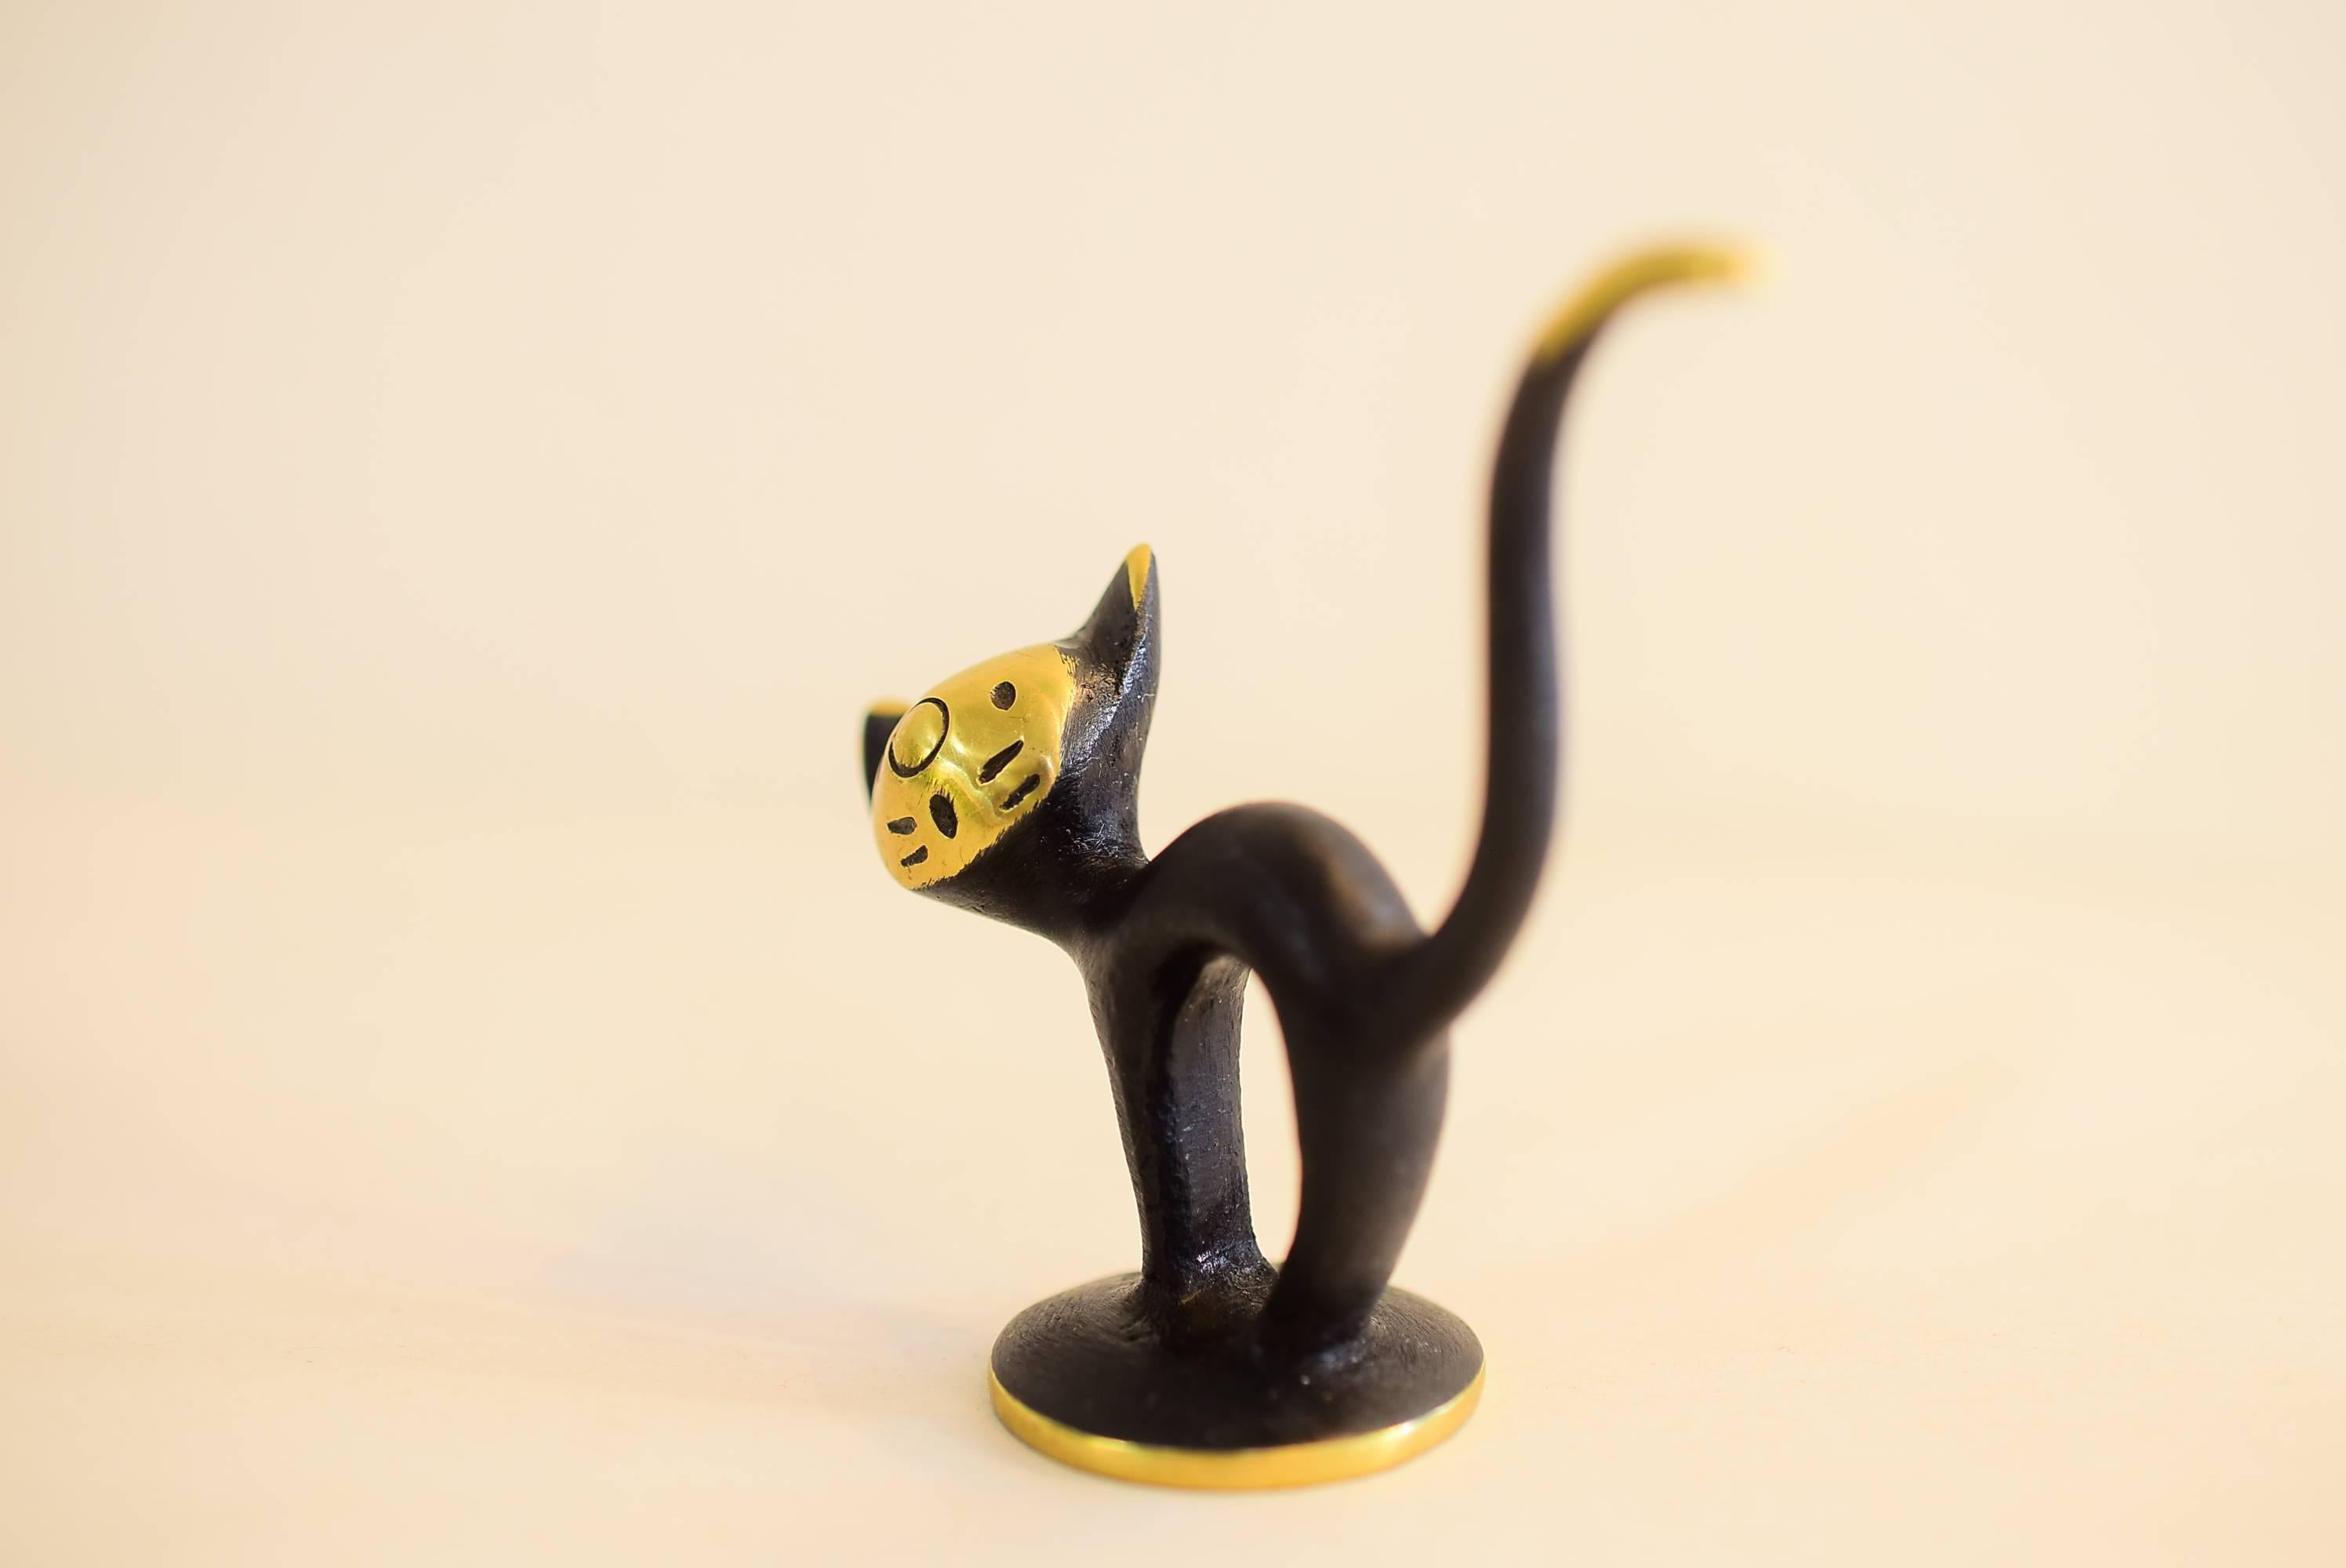 Cat figurine by Walter Bosse original condition.